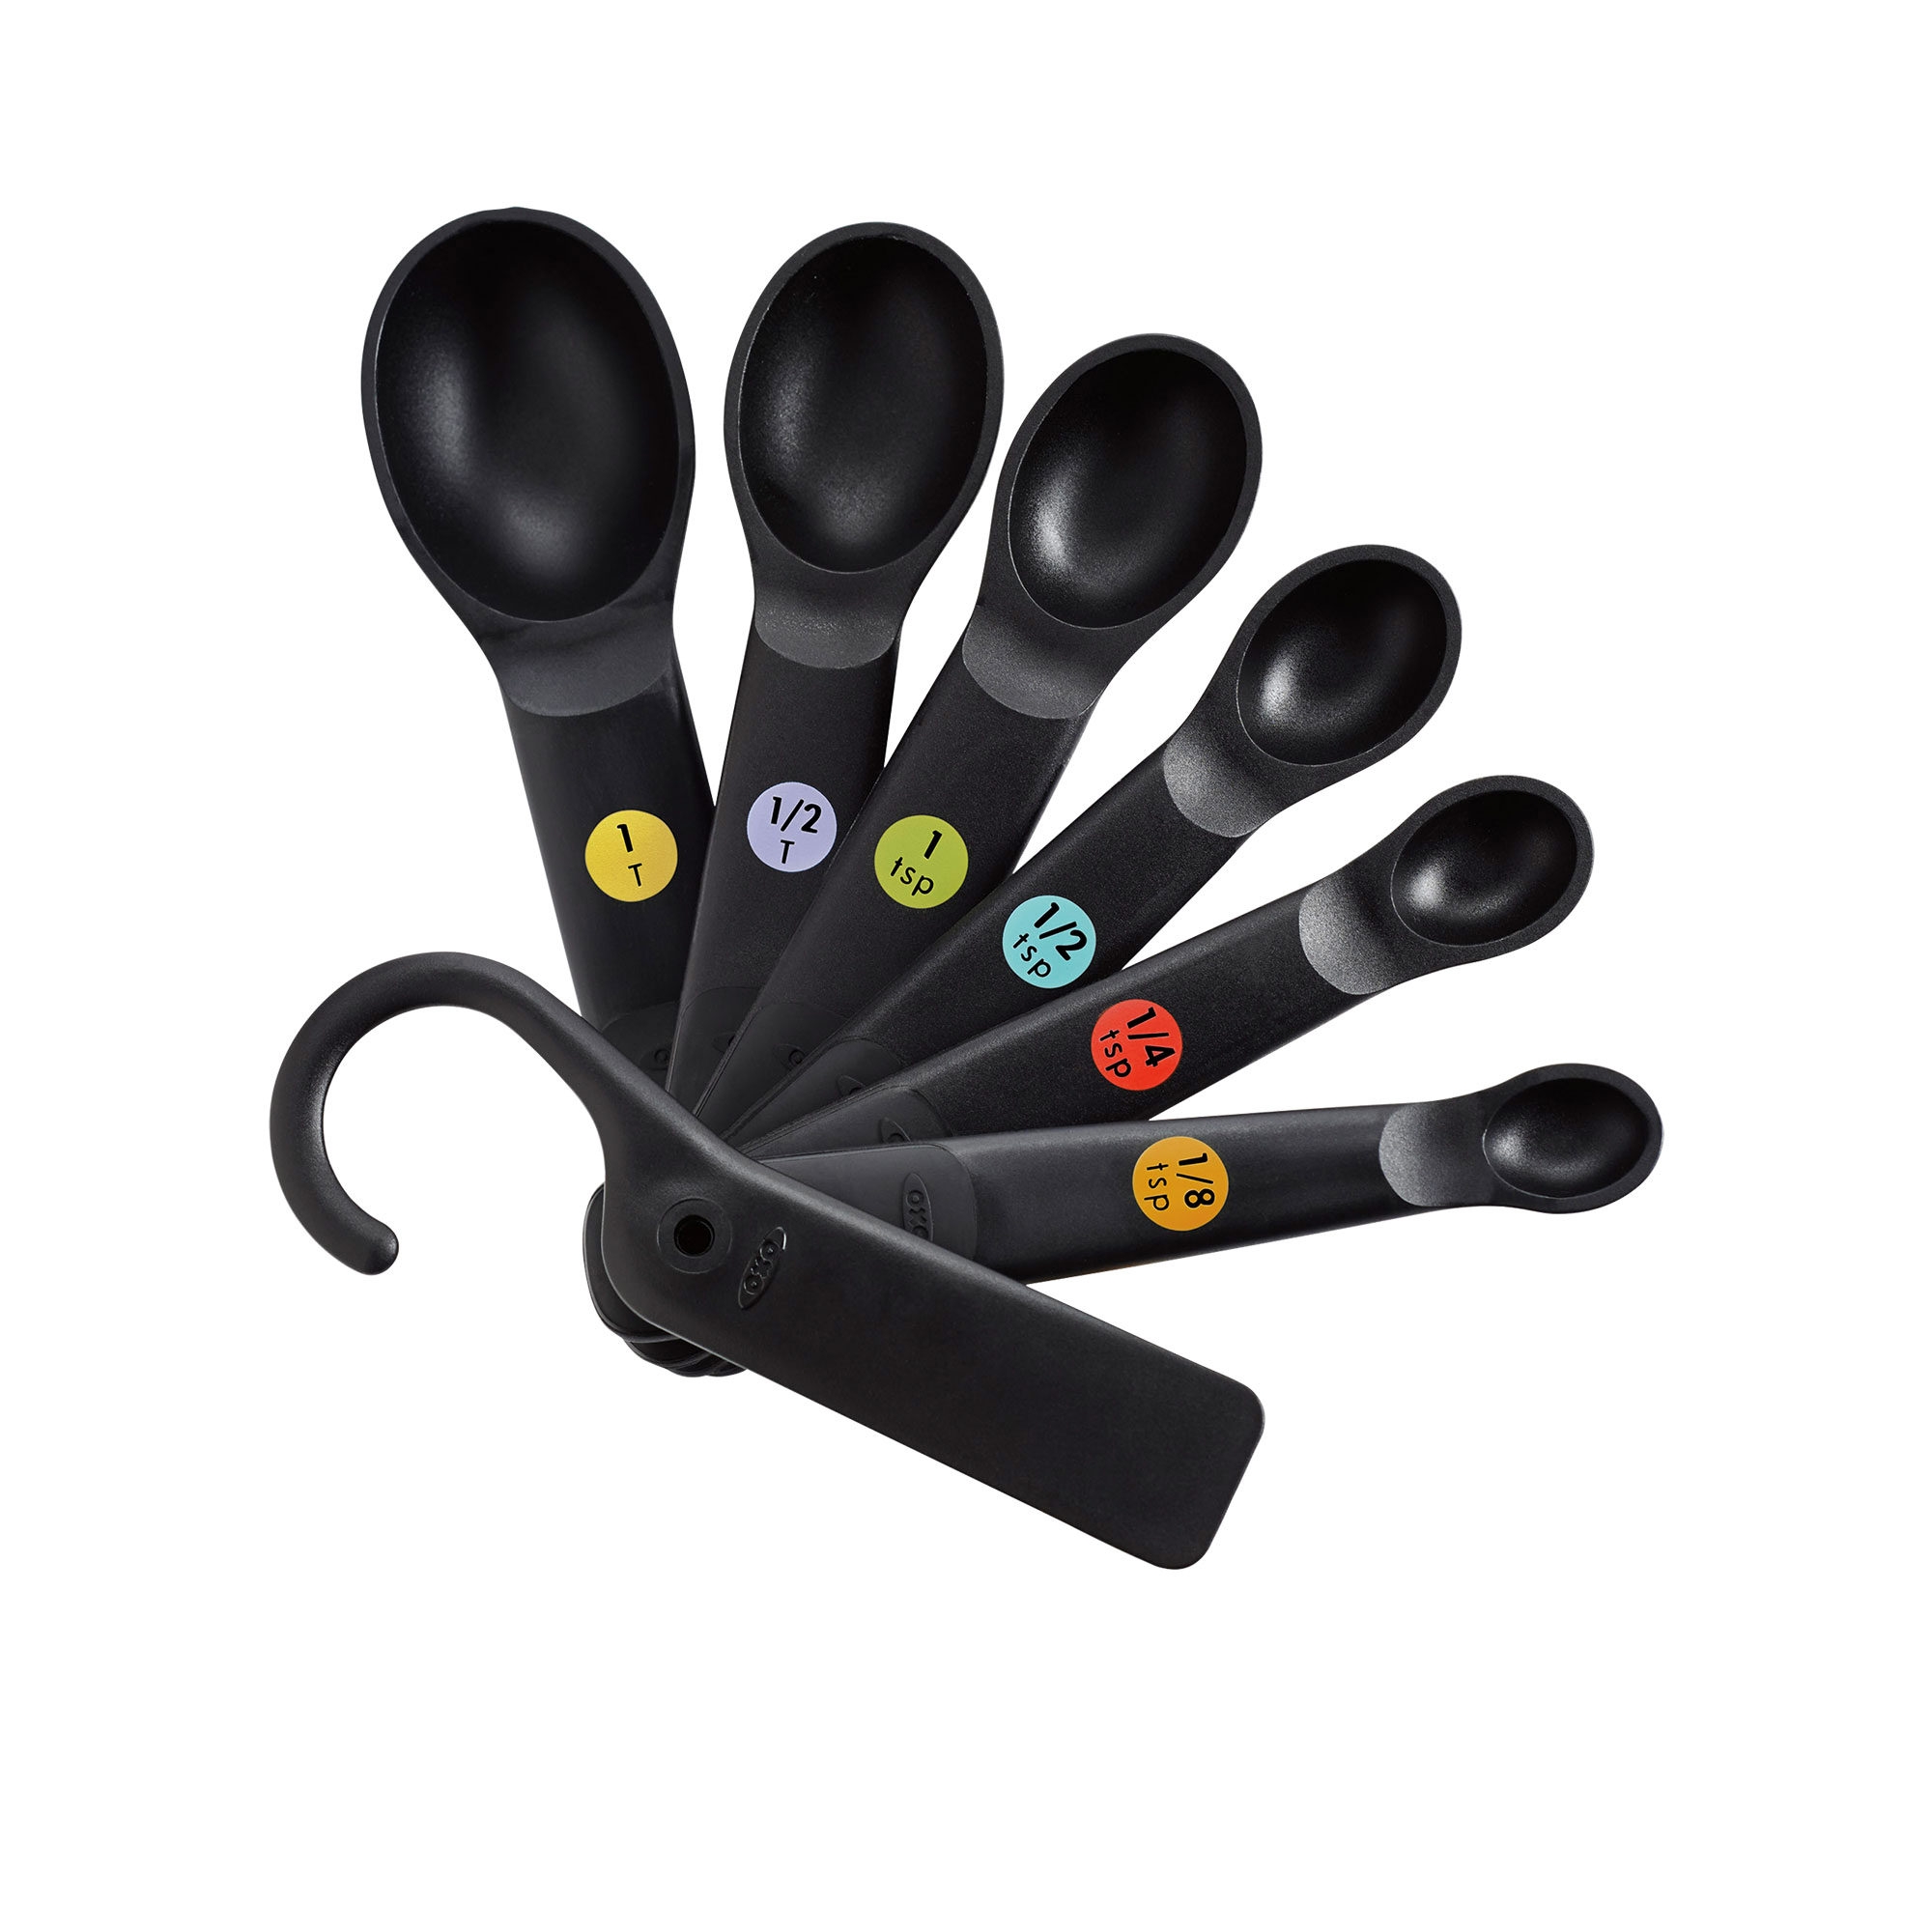 OXO Good Grips Measuring Spoon Set 7pc Black Image 1